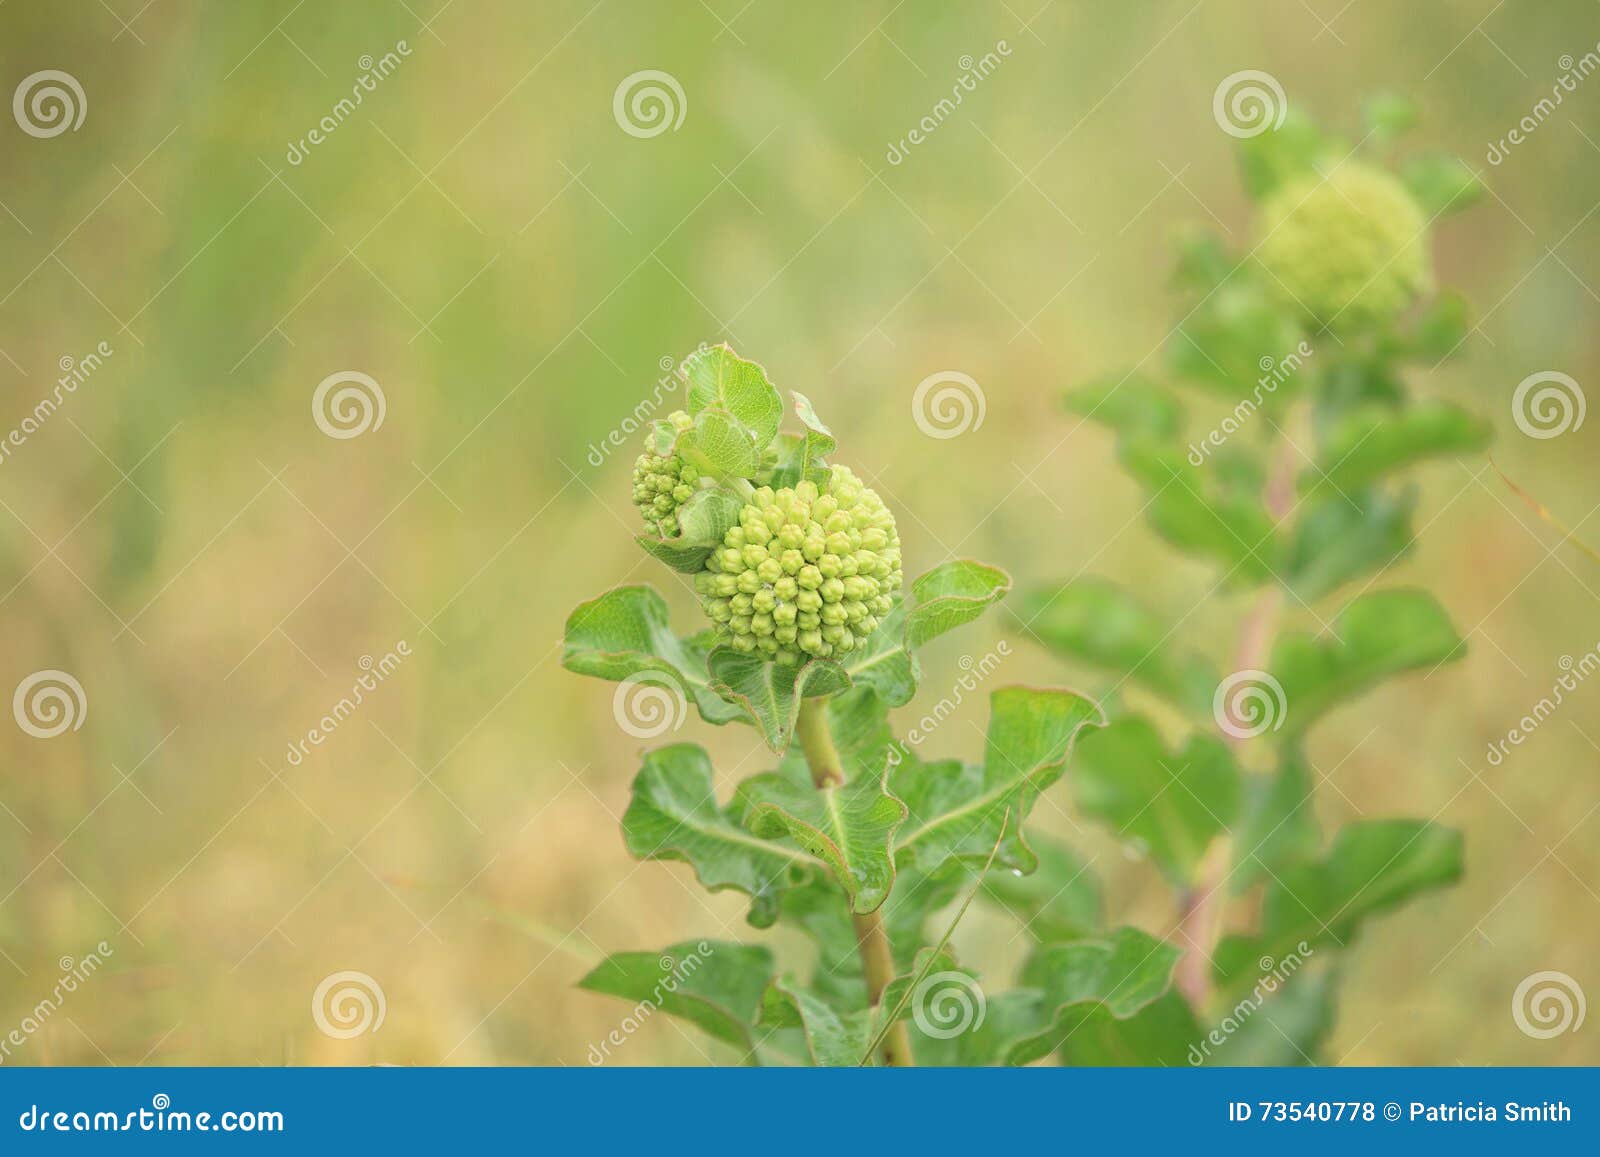 green comet milkweed asclepias viridiflora